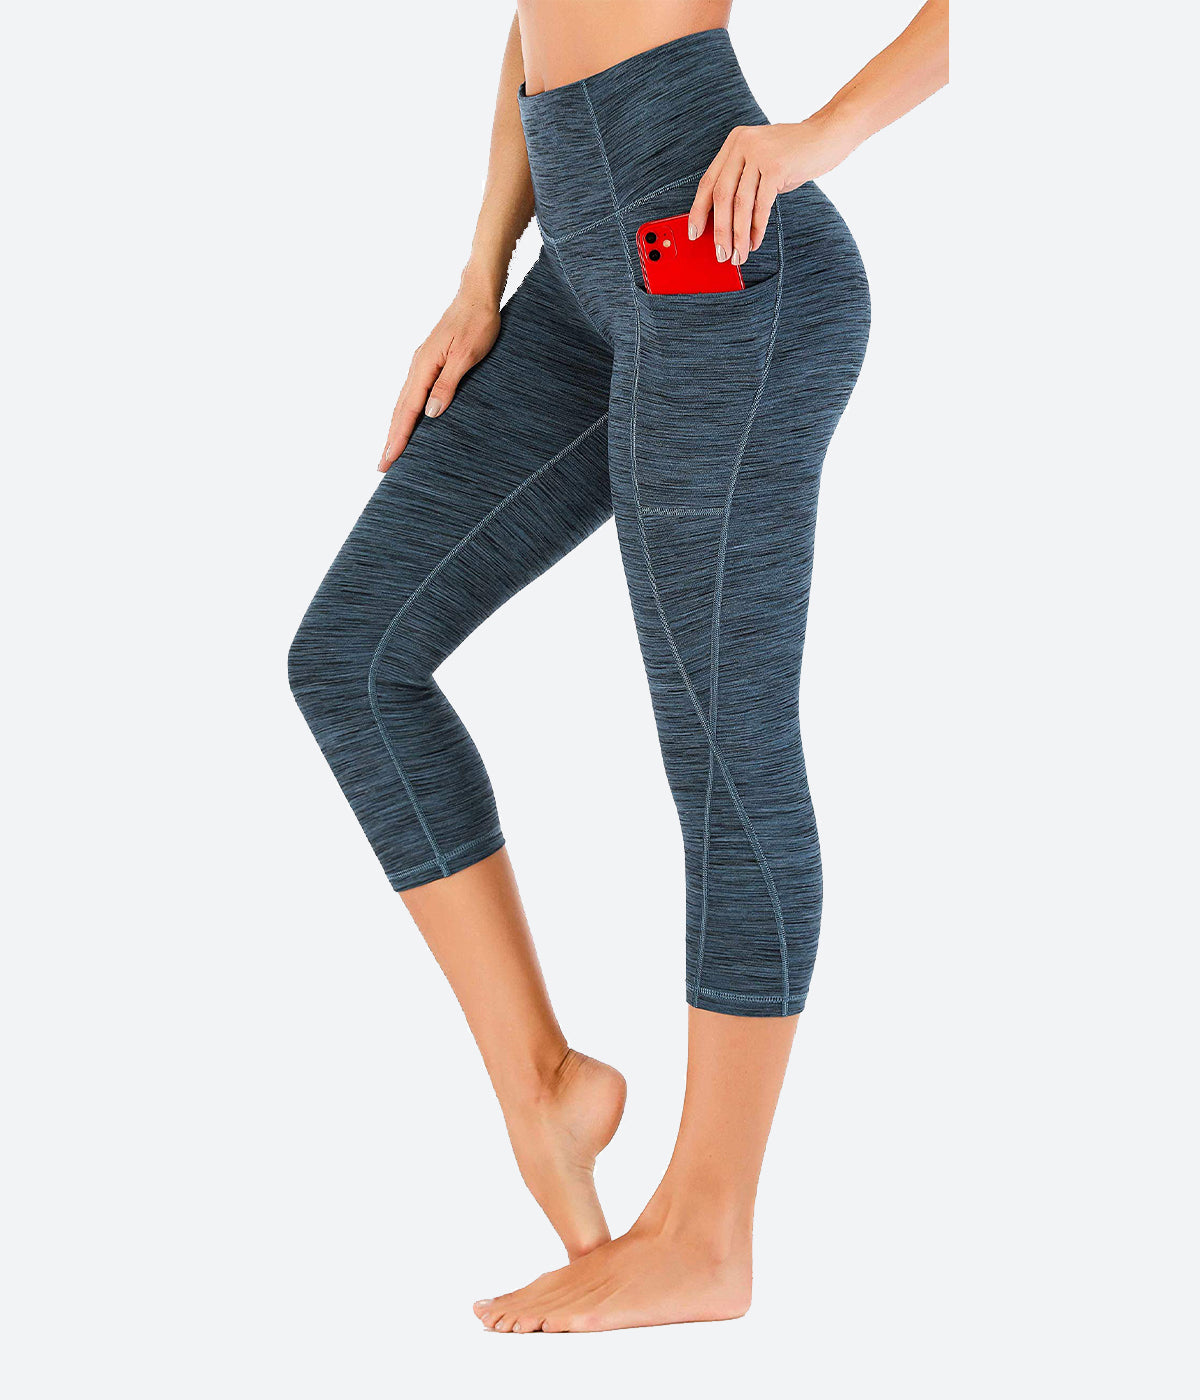 Capri Yoga Pants • Workout Capris • Capris With Pockets • Flared Capris •  Value Yoga